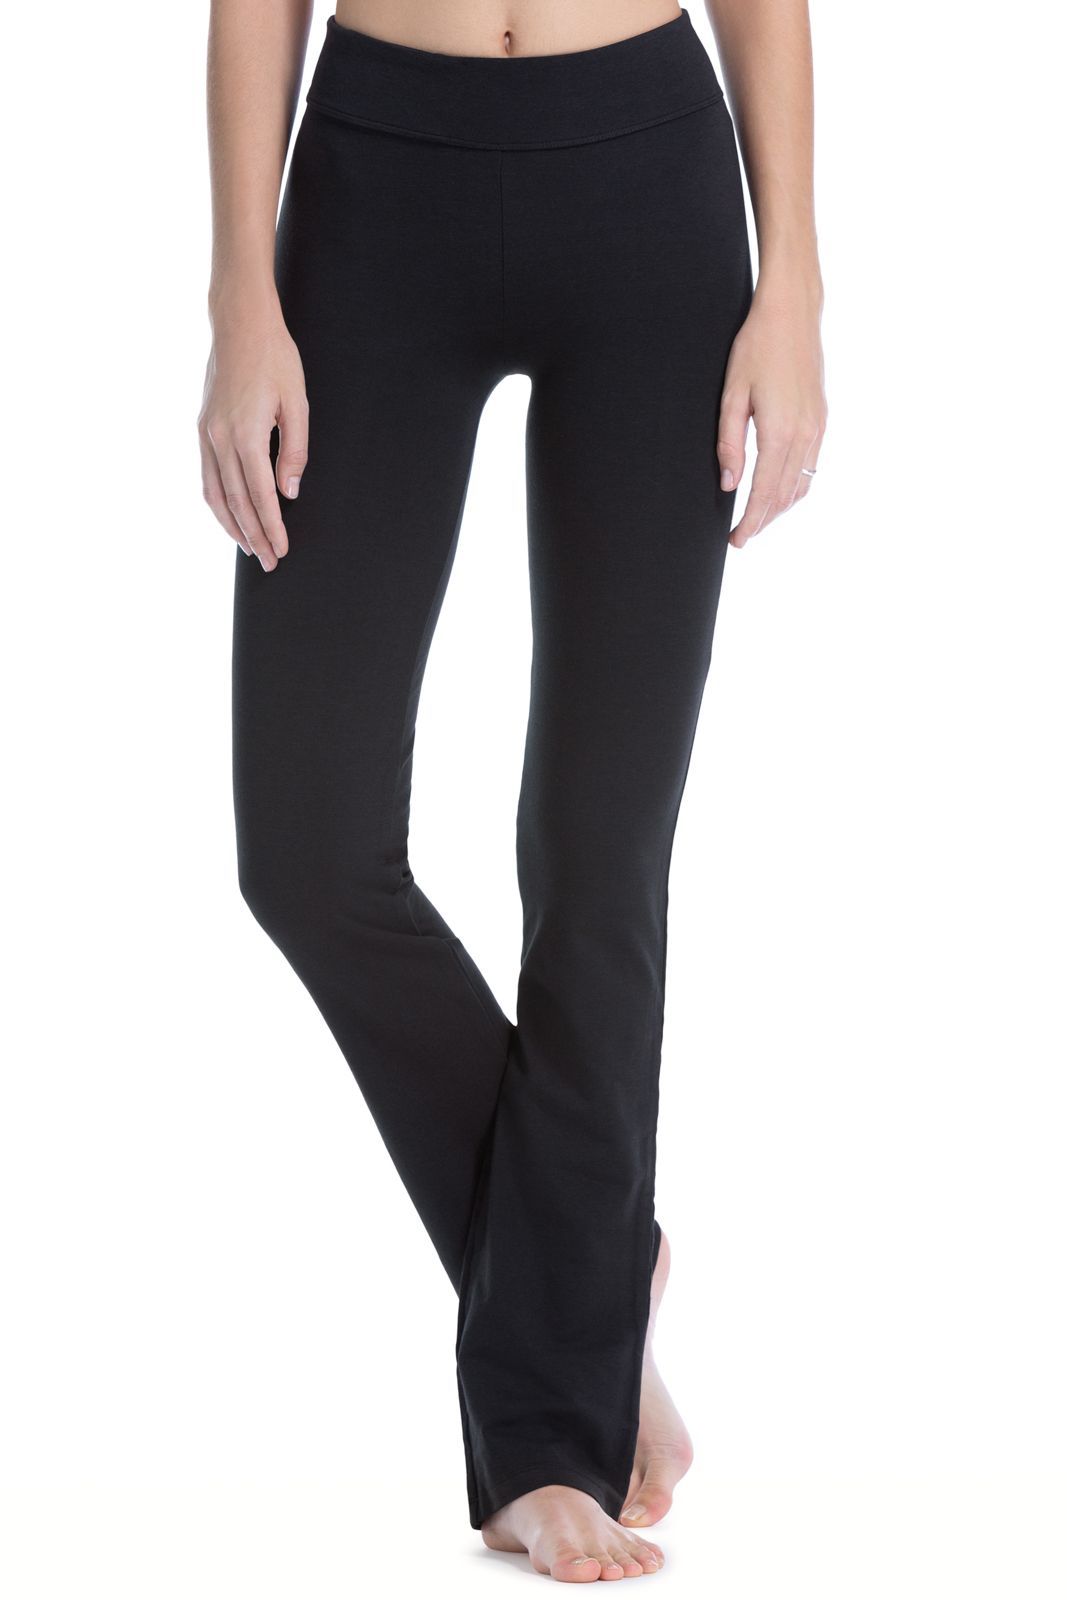 Women Bootcut Yoga Pants Casual Long Bootleg High Waist Flare Pants with  Pockets | eBay